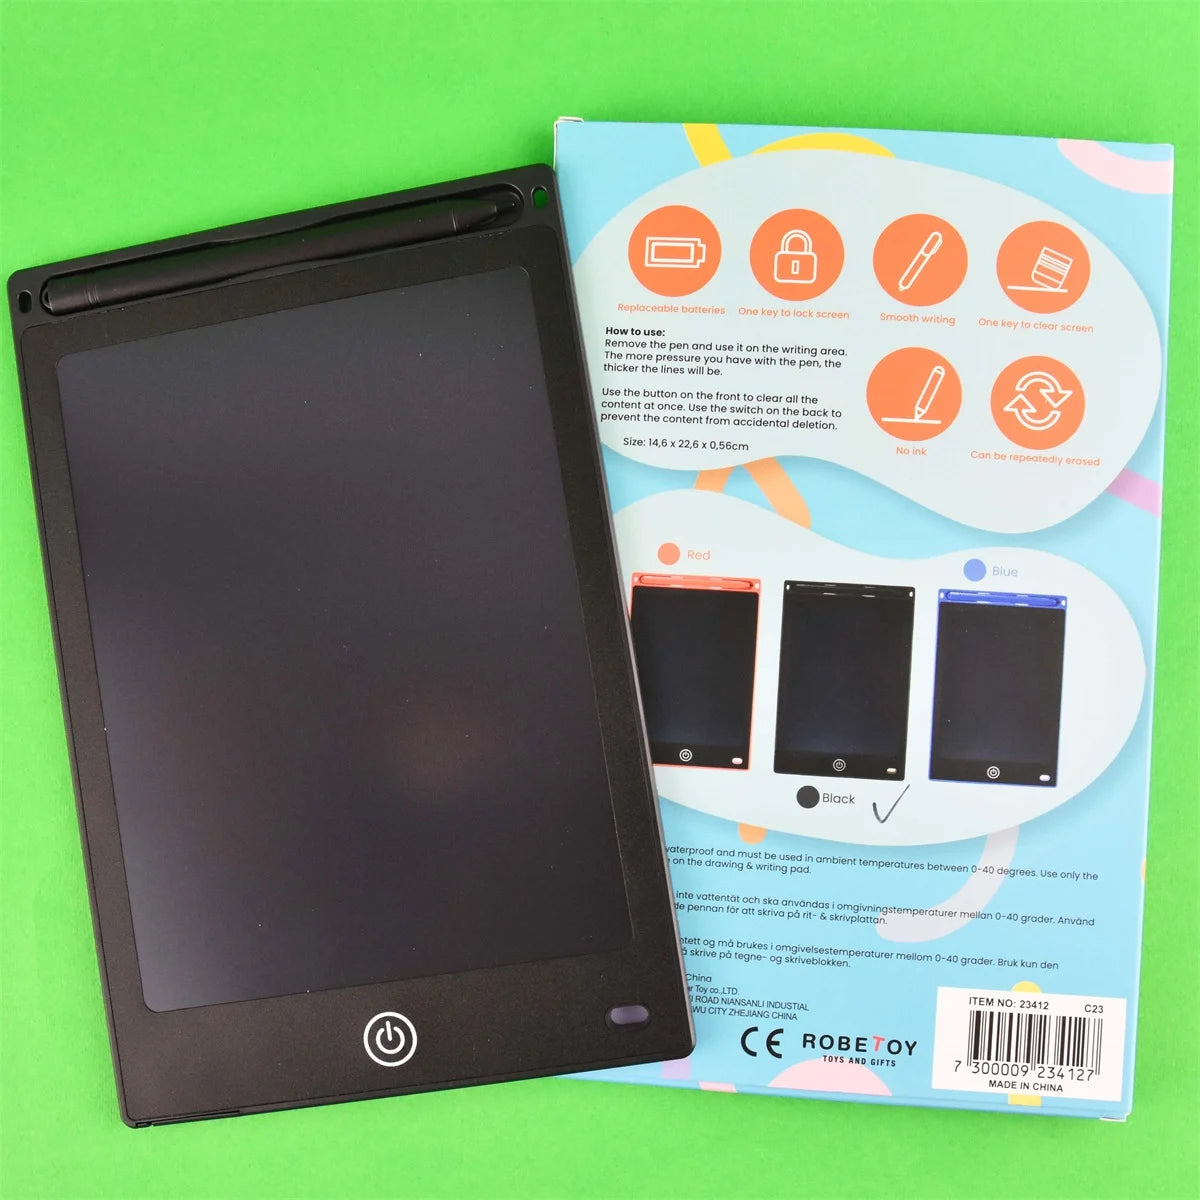 Robetoy LCD tablet, sort